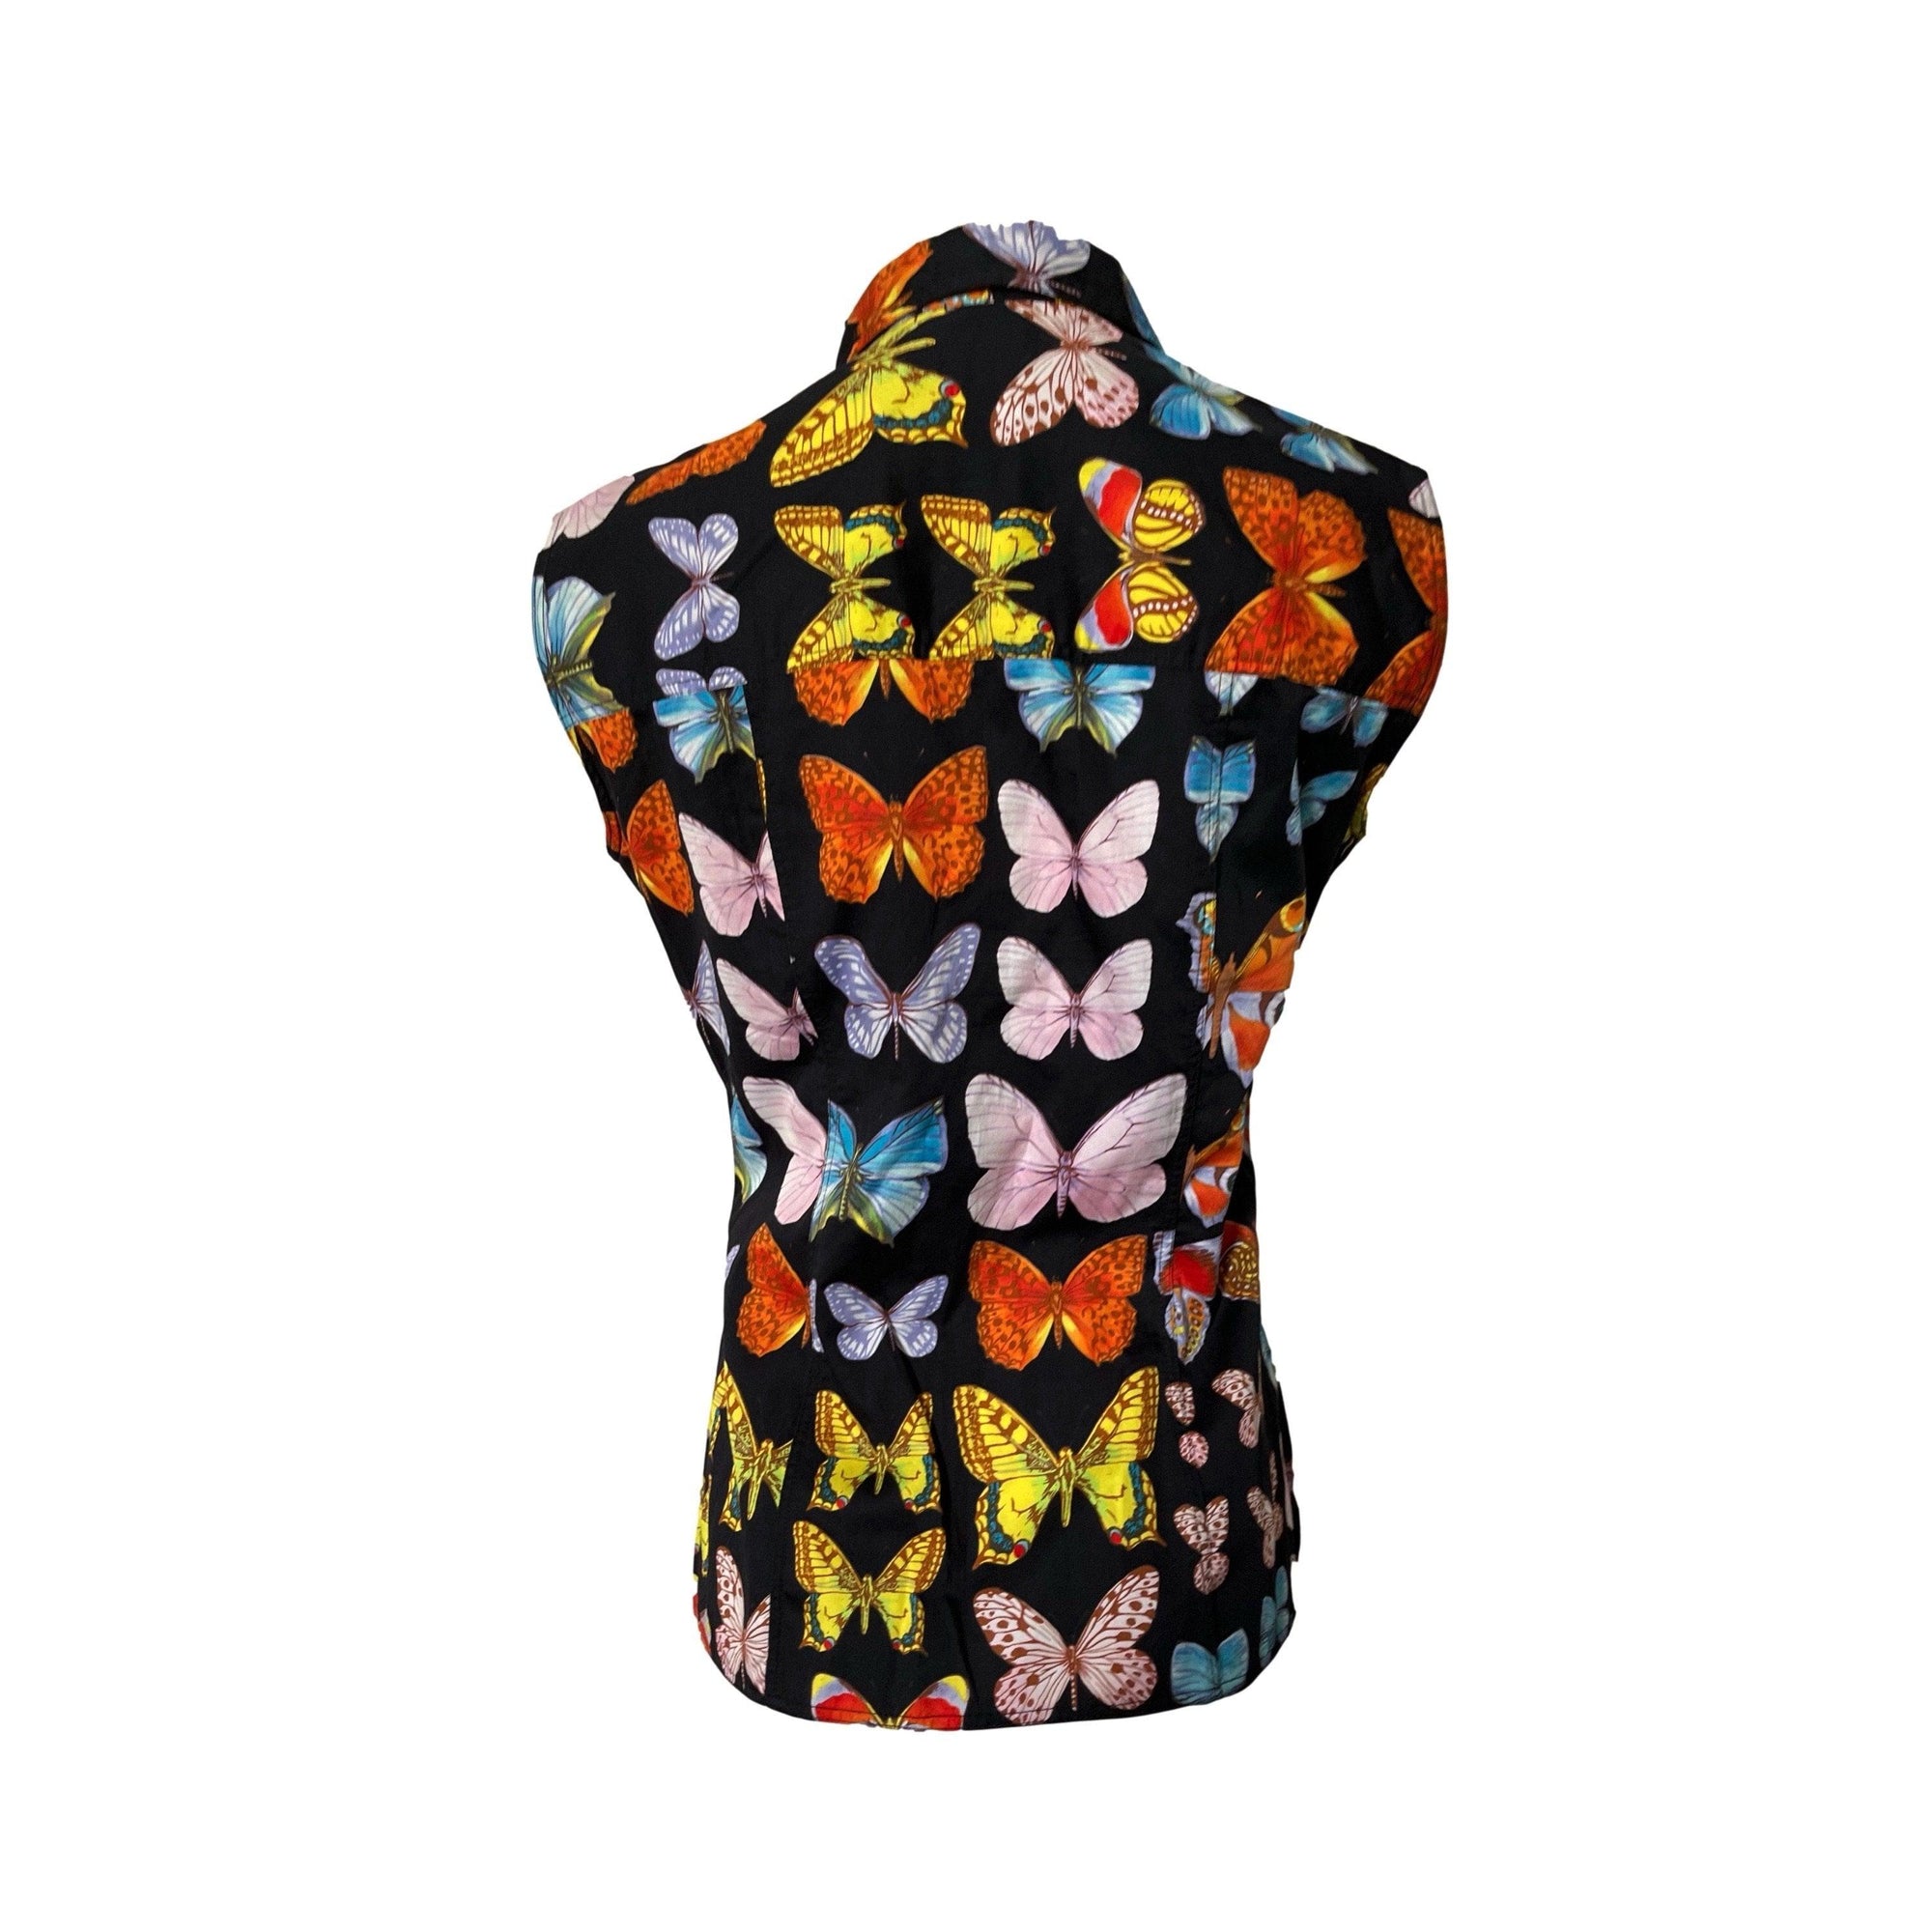 Versace Multicolor Butterfly Print Top - Apparel